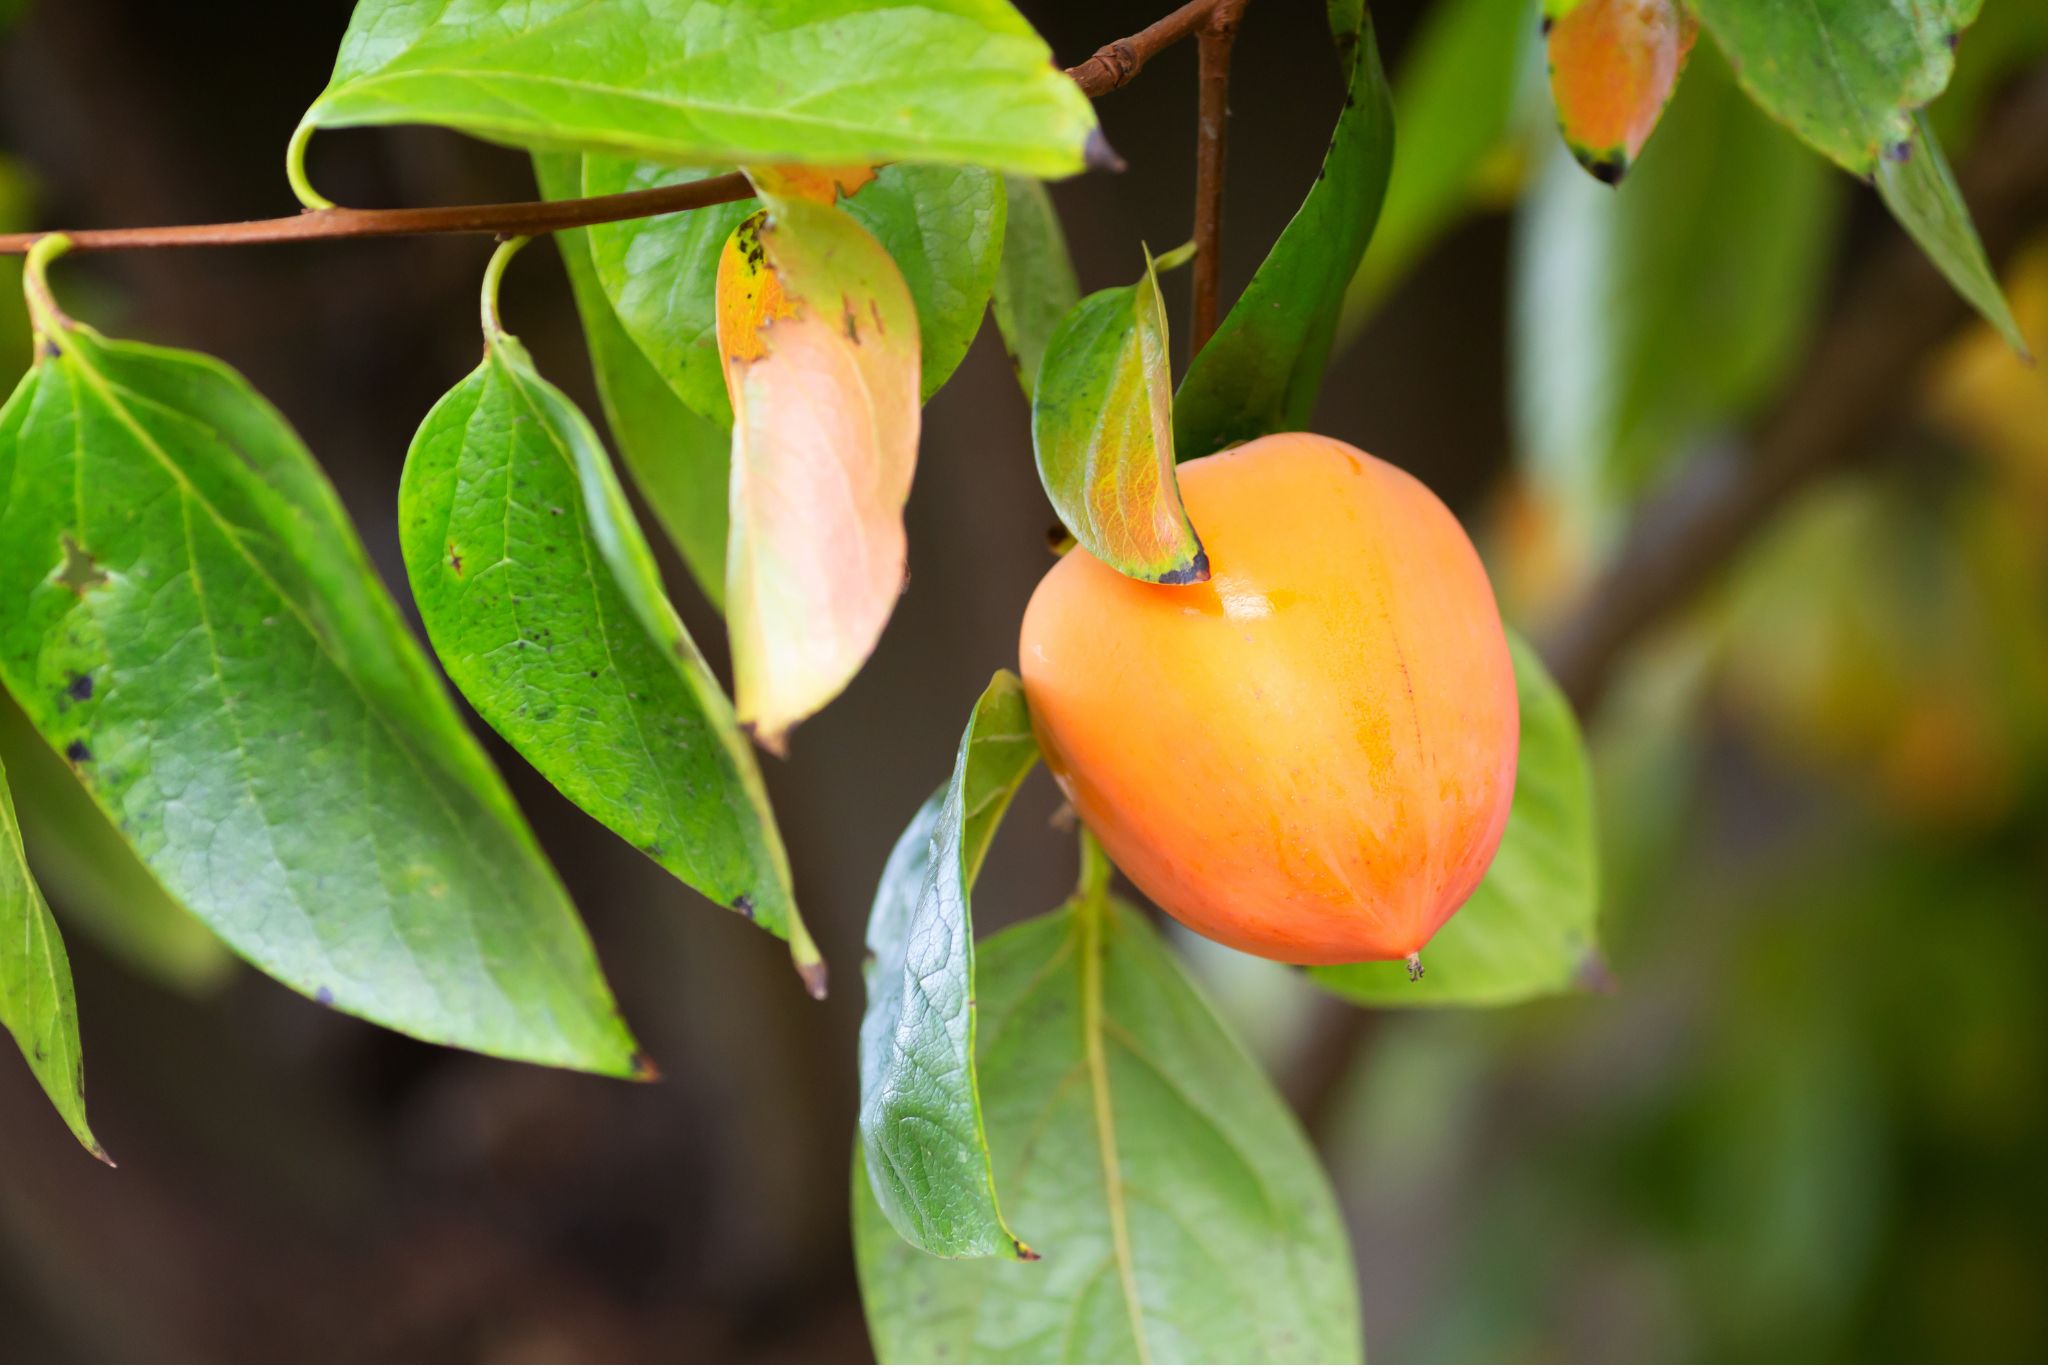 hachiya persimmons